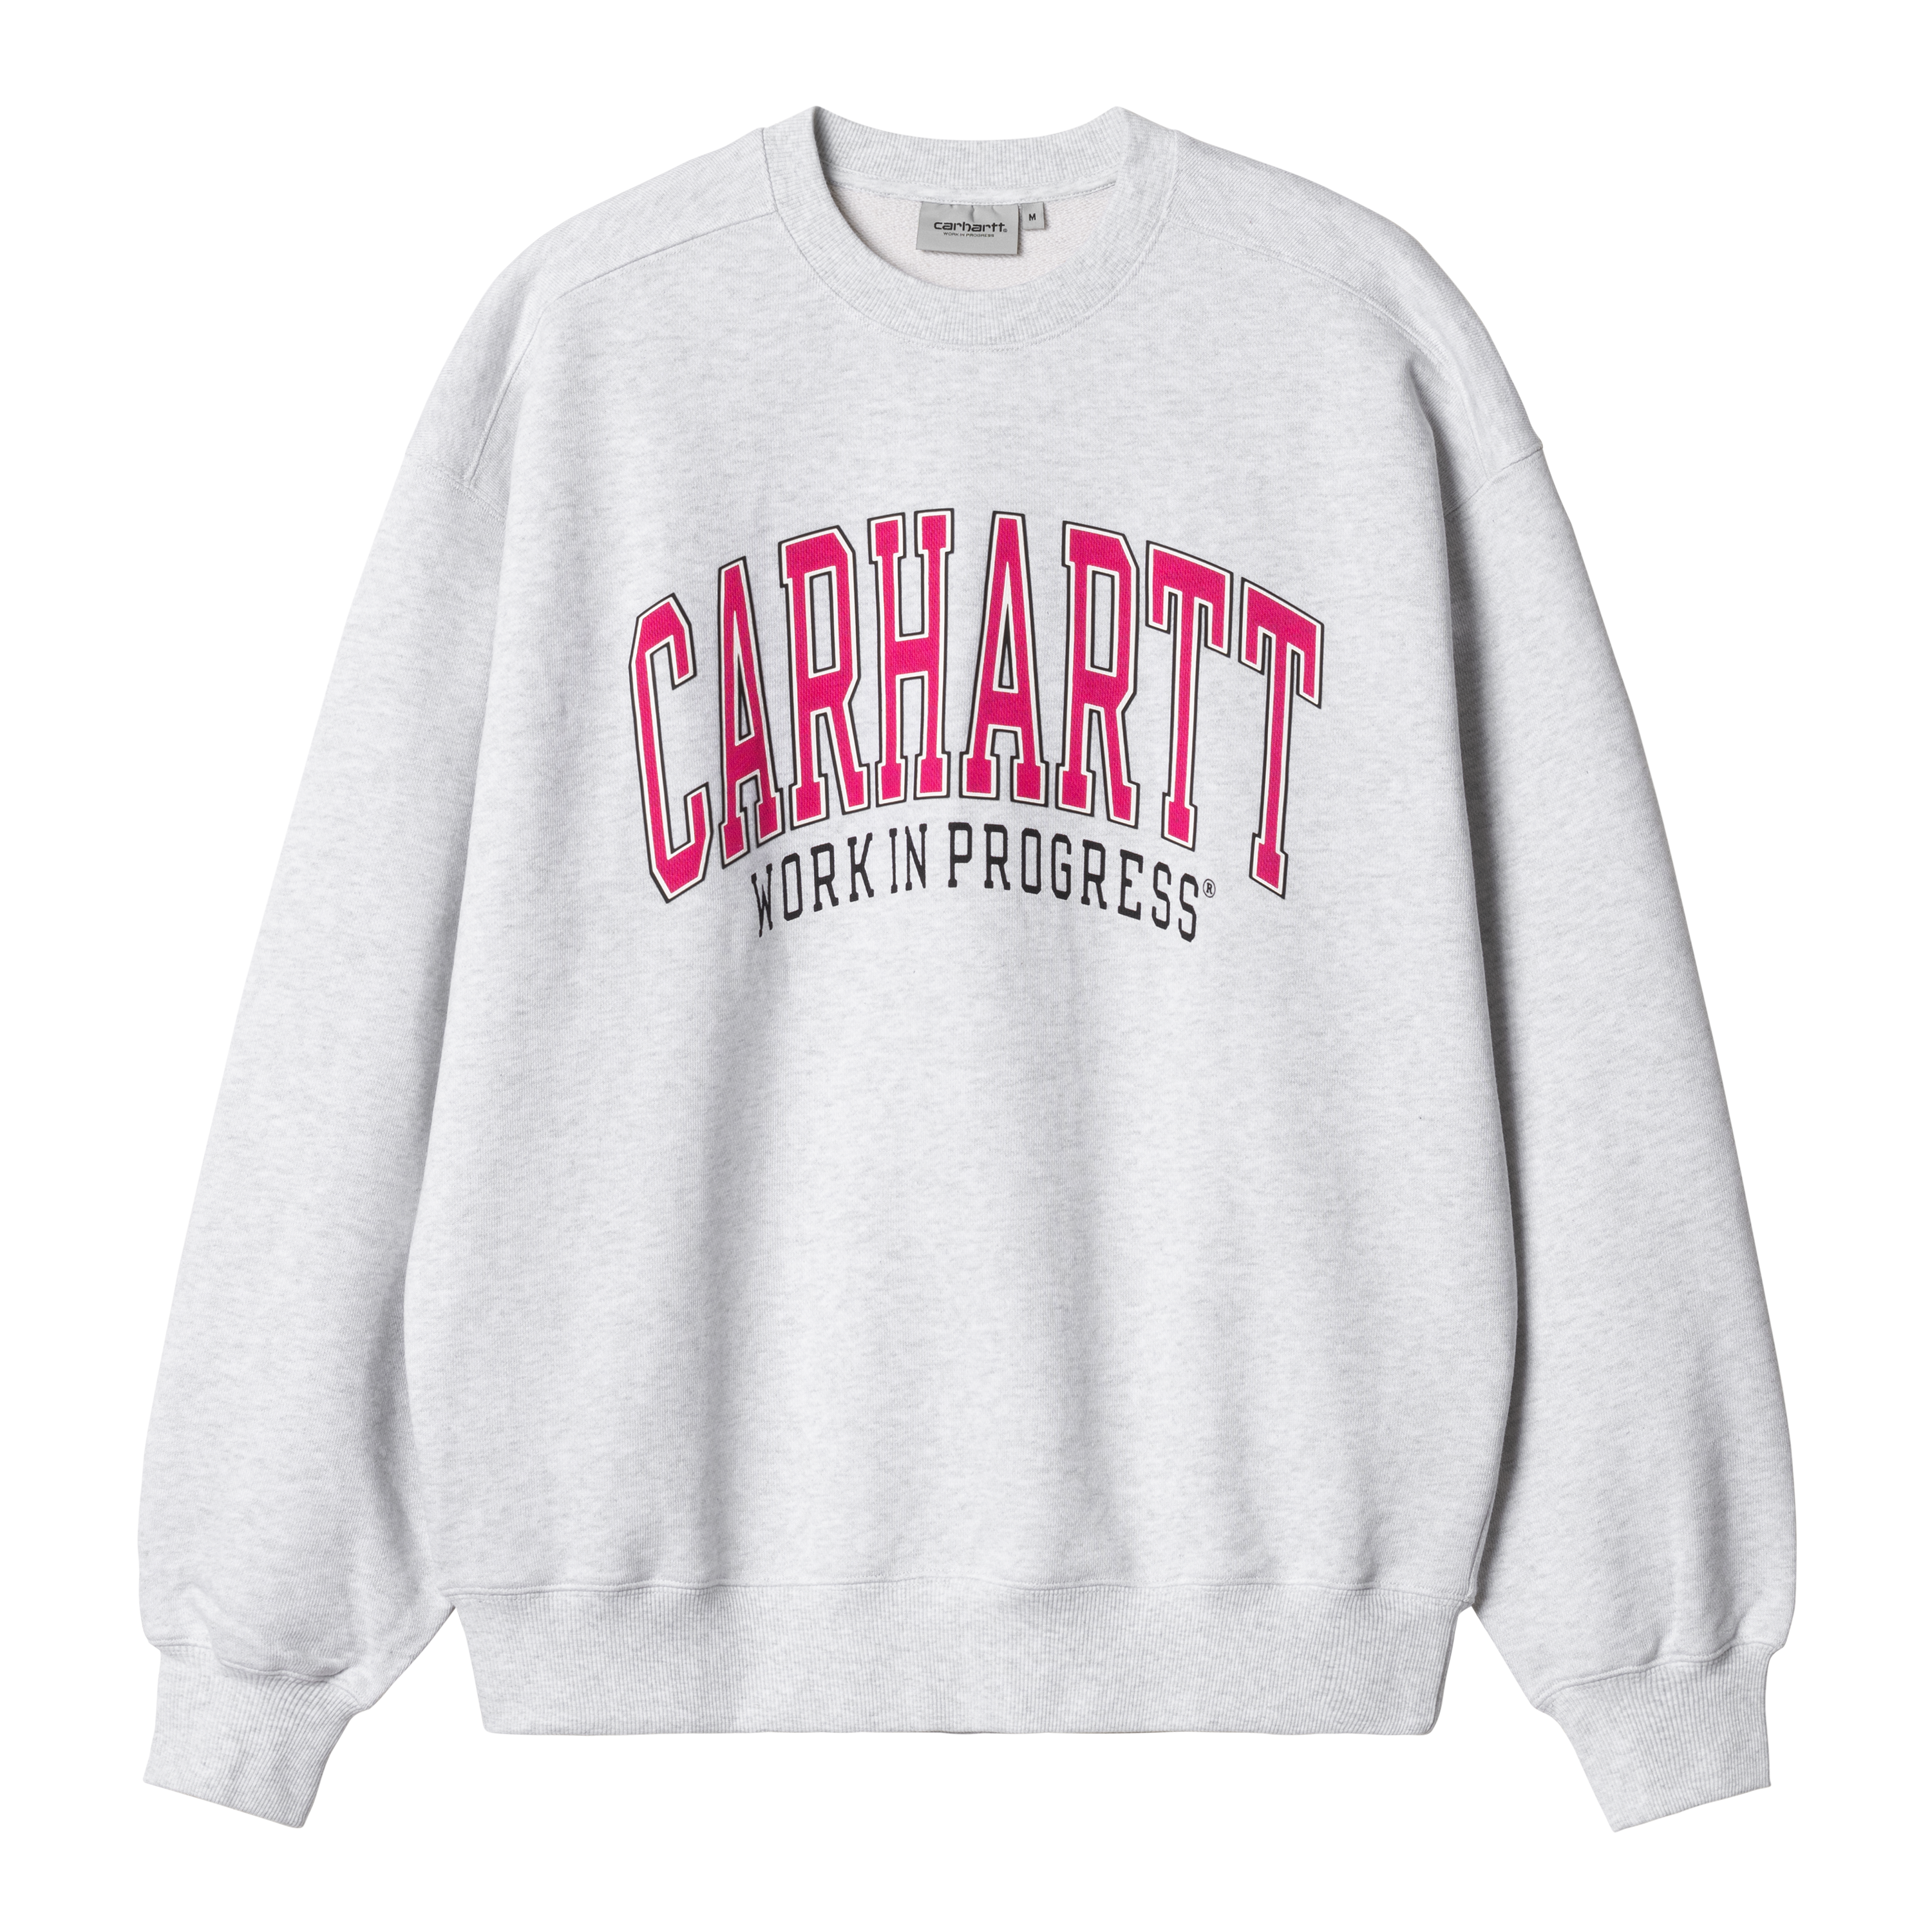 Carhartt WIP Bradley Sweatshirt Gris